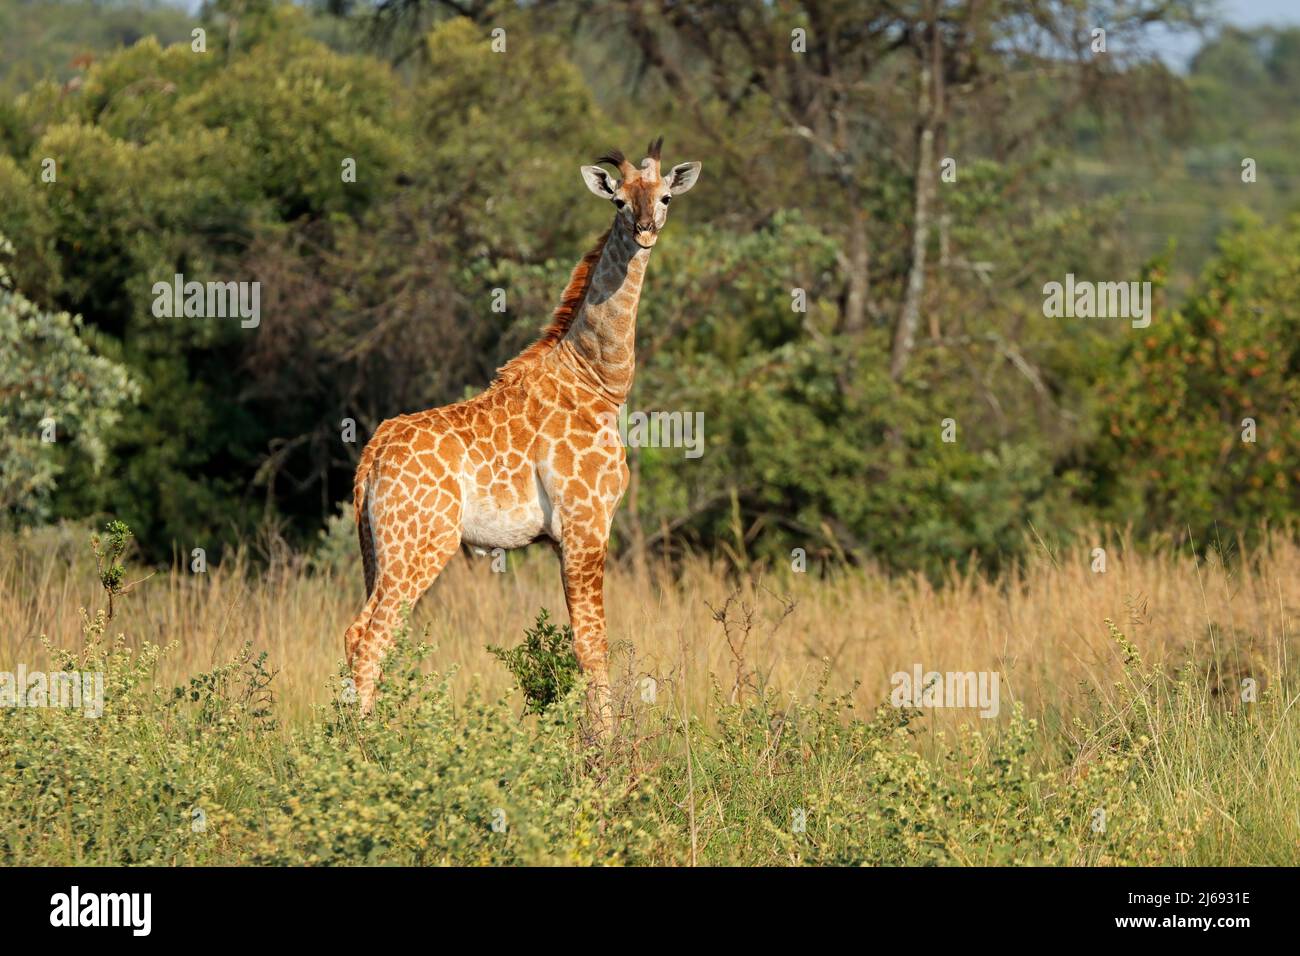 Una jirafa joven (Giraffa camelopardalis) en hábitat natural, Sudáfrica Foto de stock